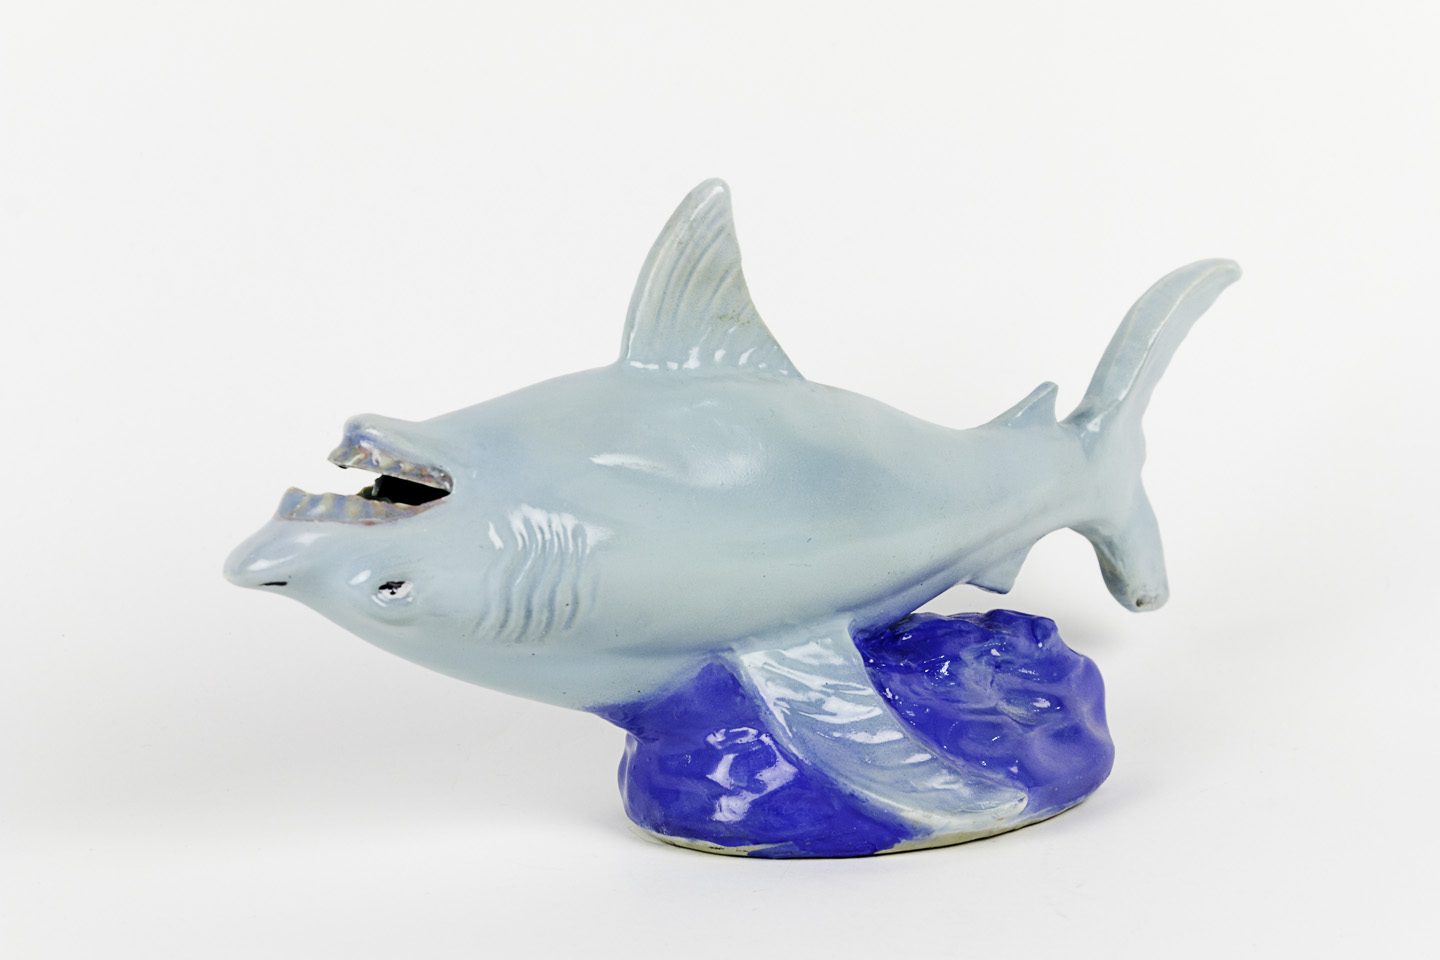  Debra Broz  Shark Inversion (Oddities Series), 2011  Found Ceramic objects, epoxy compound, pain, sealer on wooden stand 